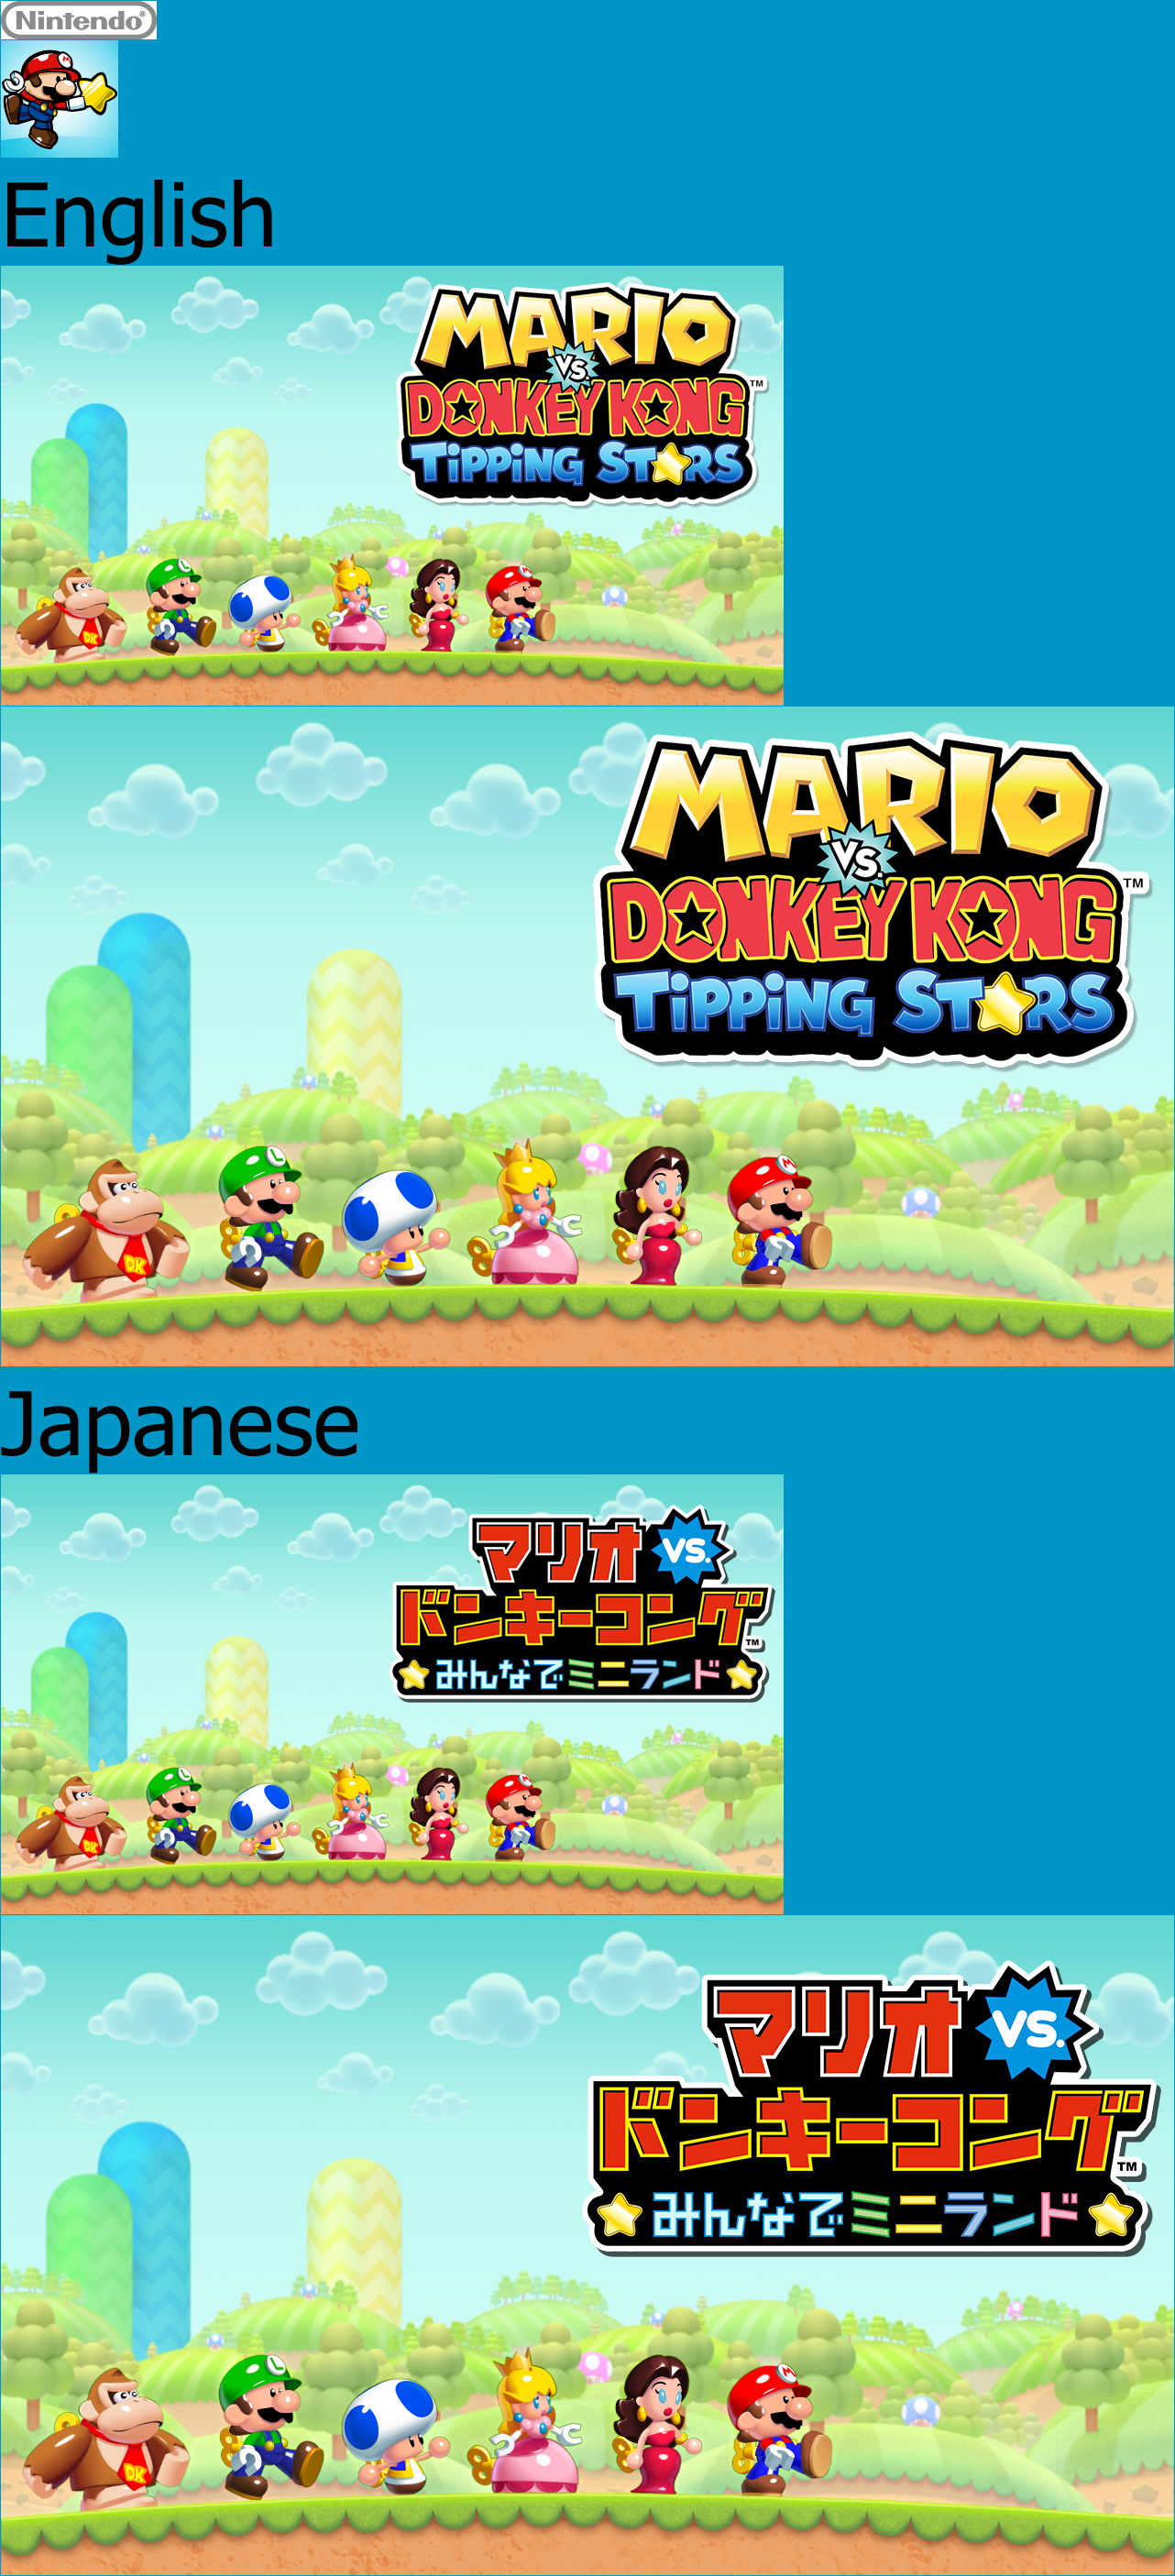 Mario vs. Donkey Kong: Tipping Stars - HOME Menu Icon and Banners